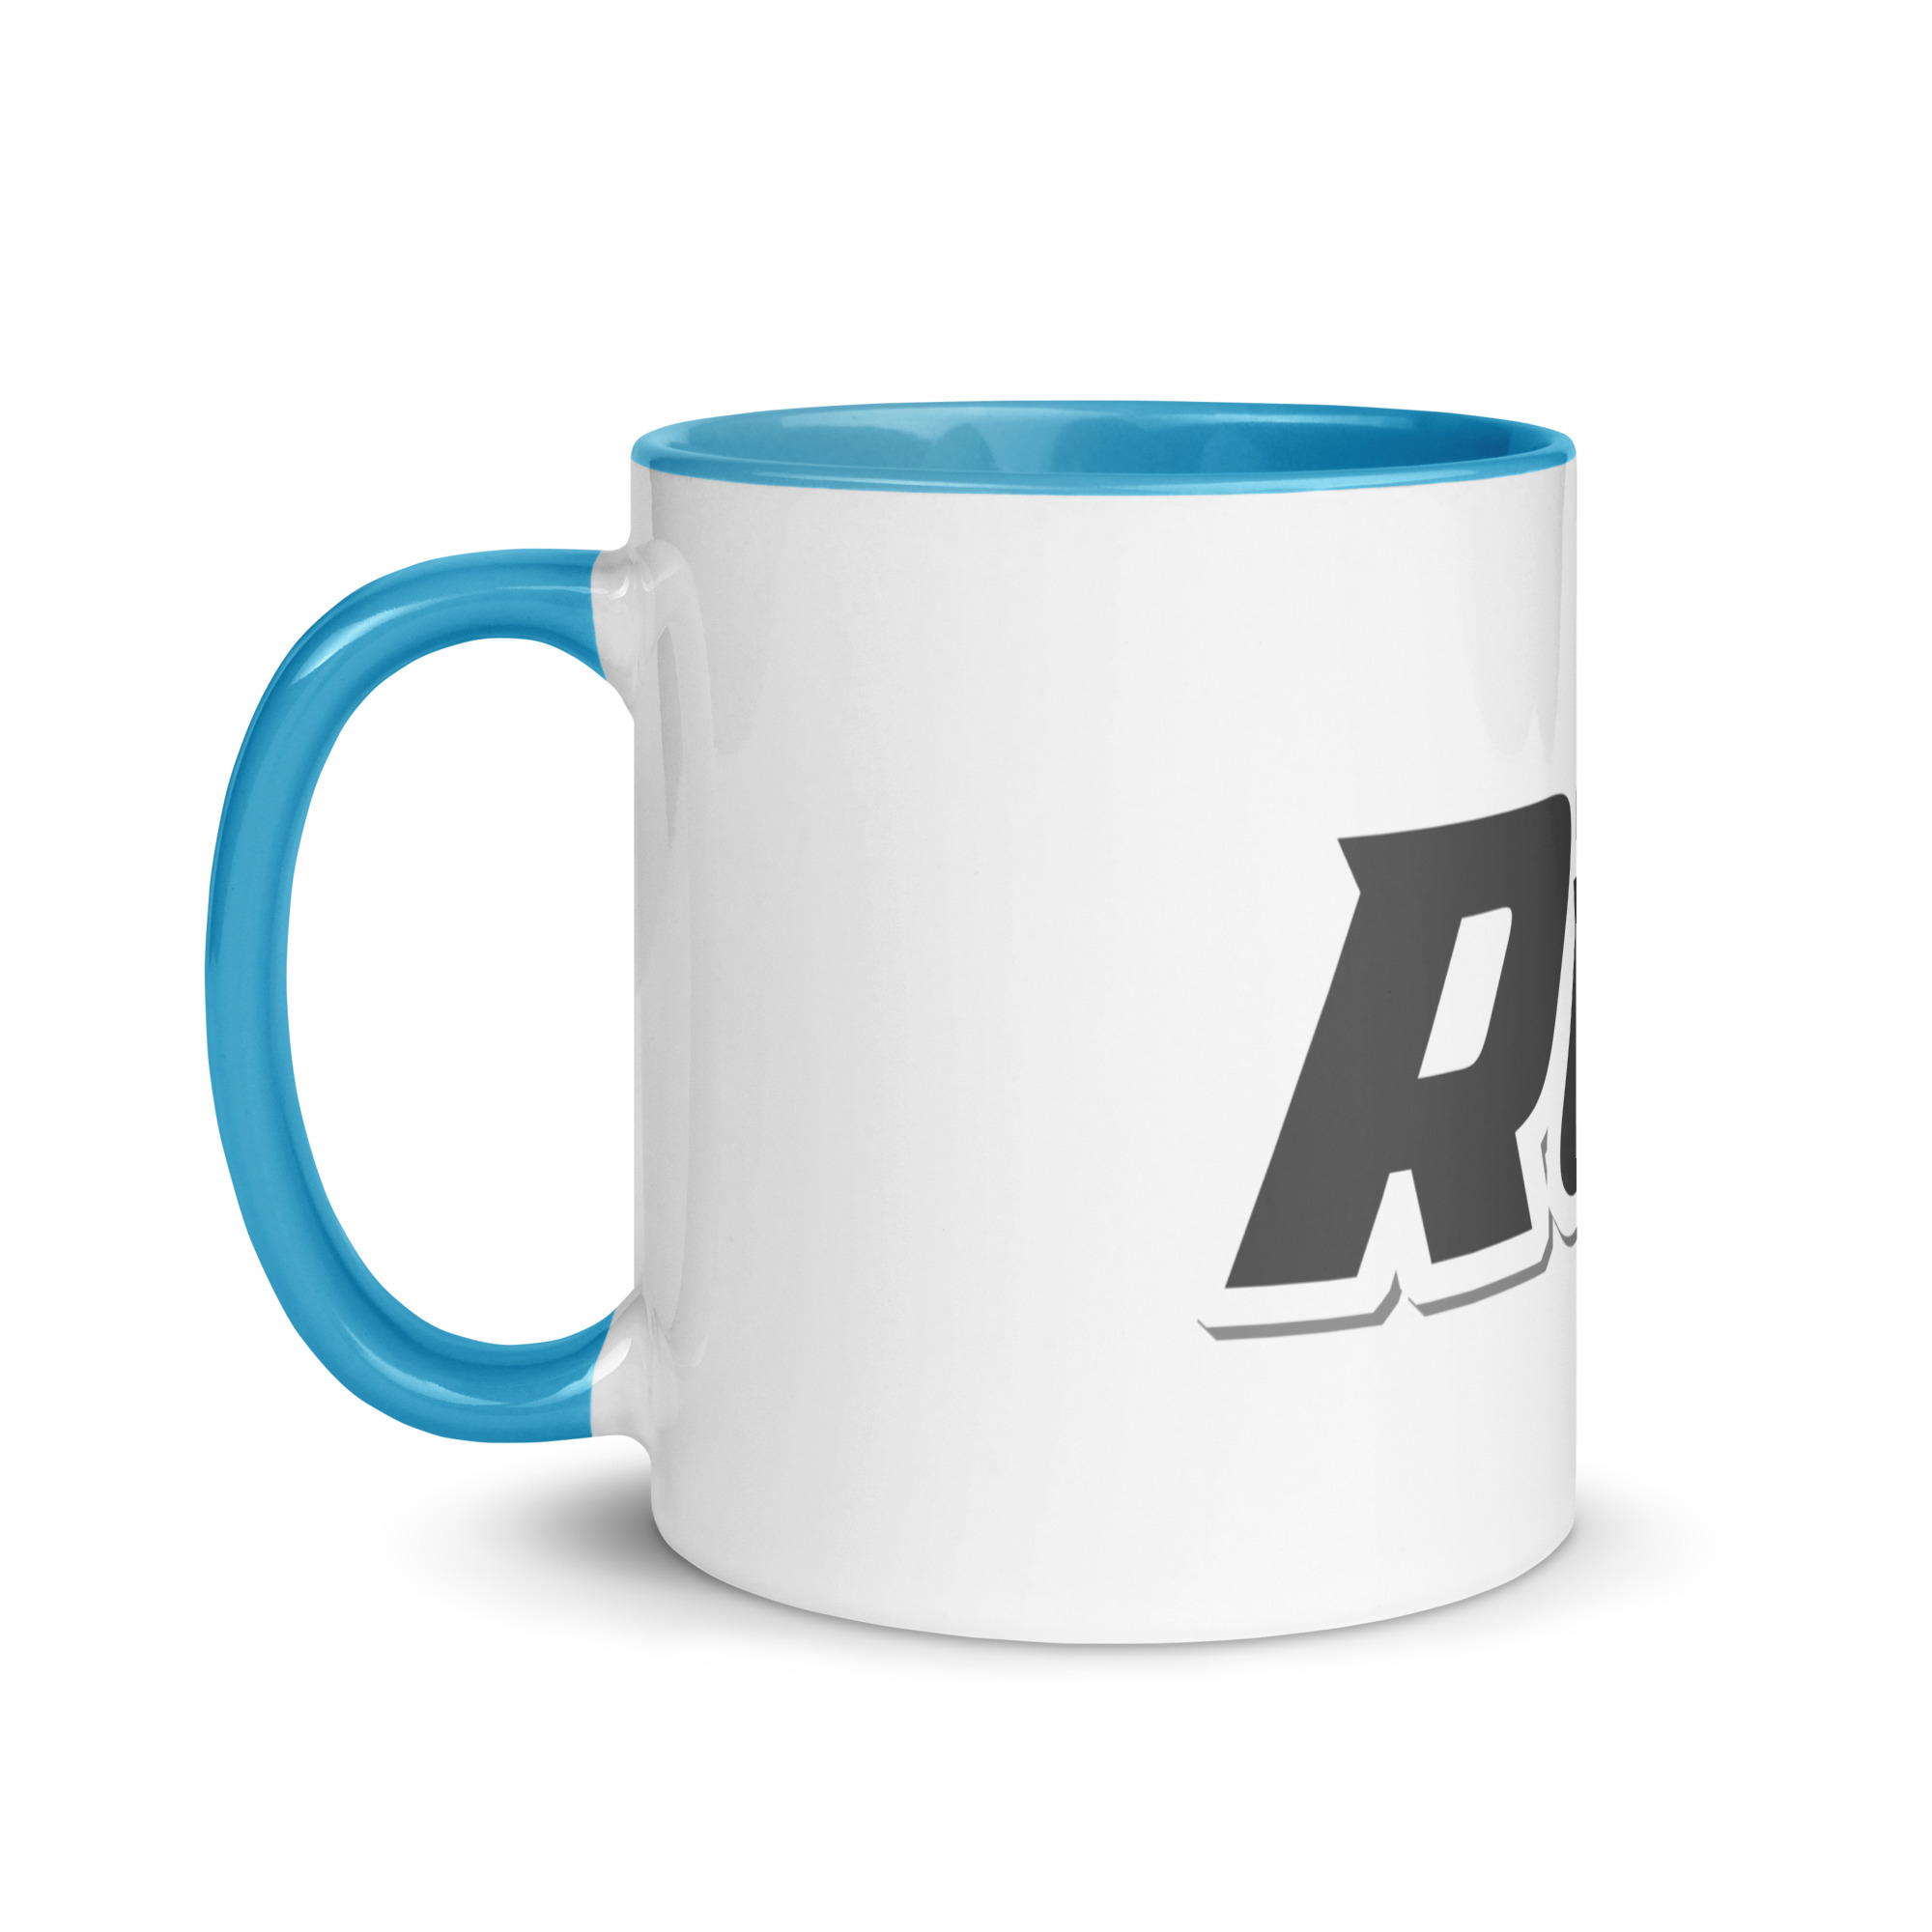 white-ceramic-mug-with-color-inside-blue-11-oz-left-6525b506090d8.jpg